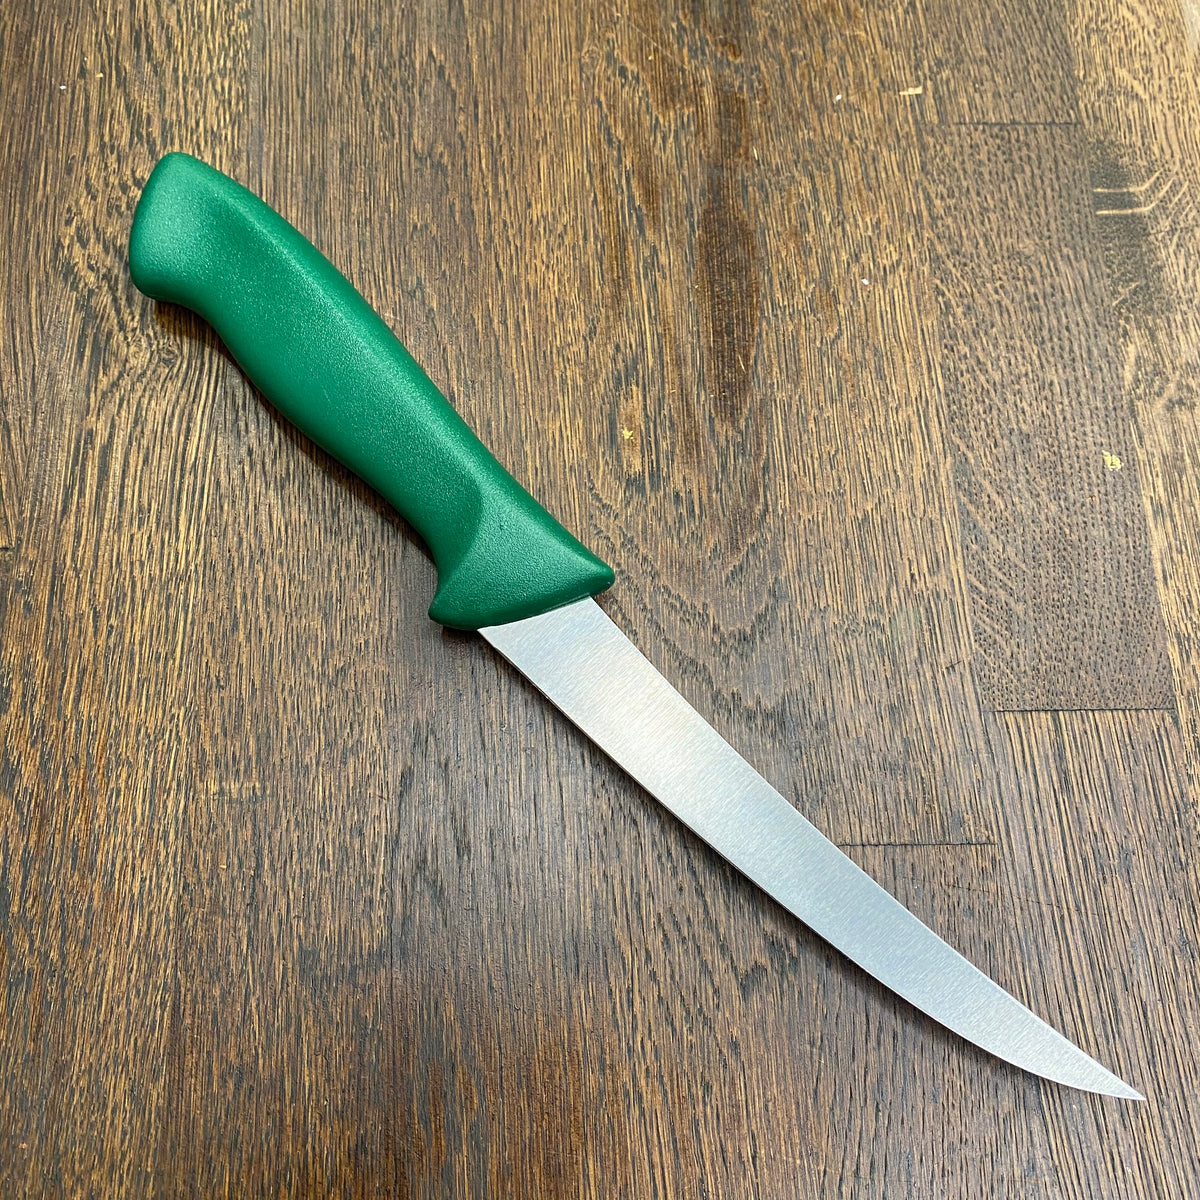 6 Boning Knife - STEELPORT Knife Co.